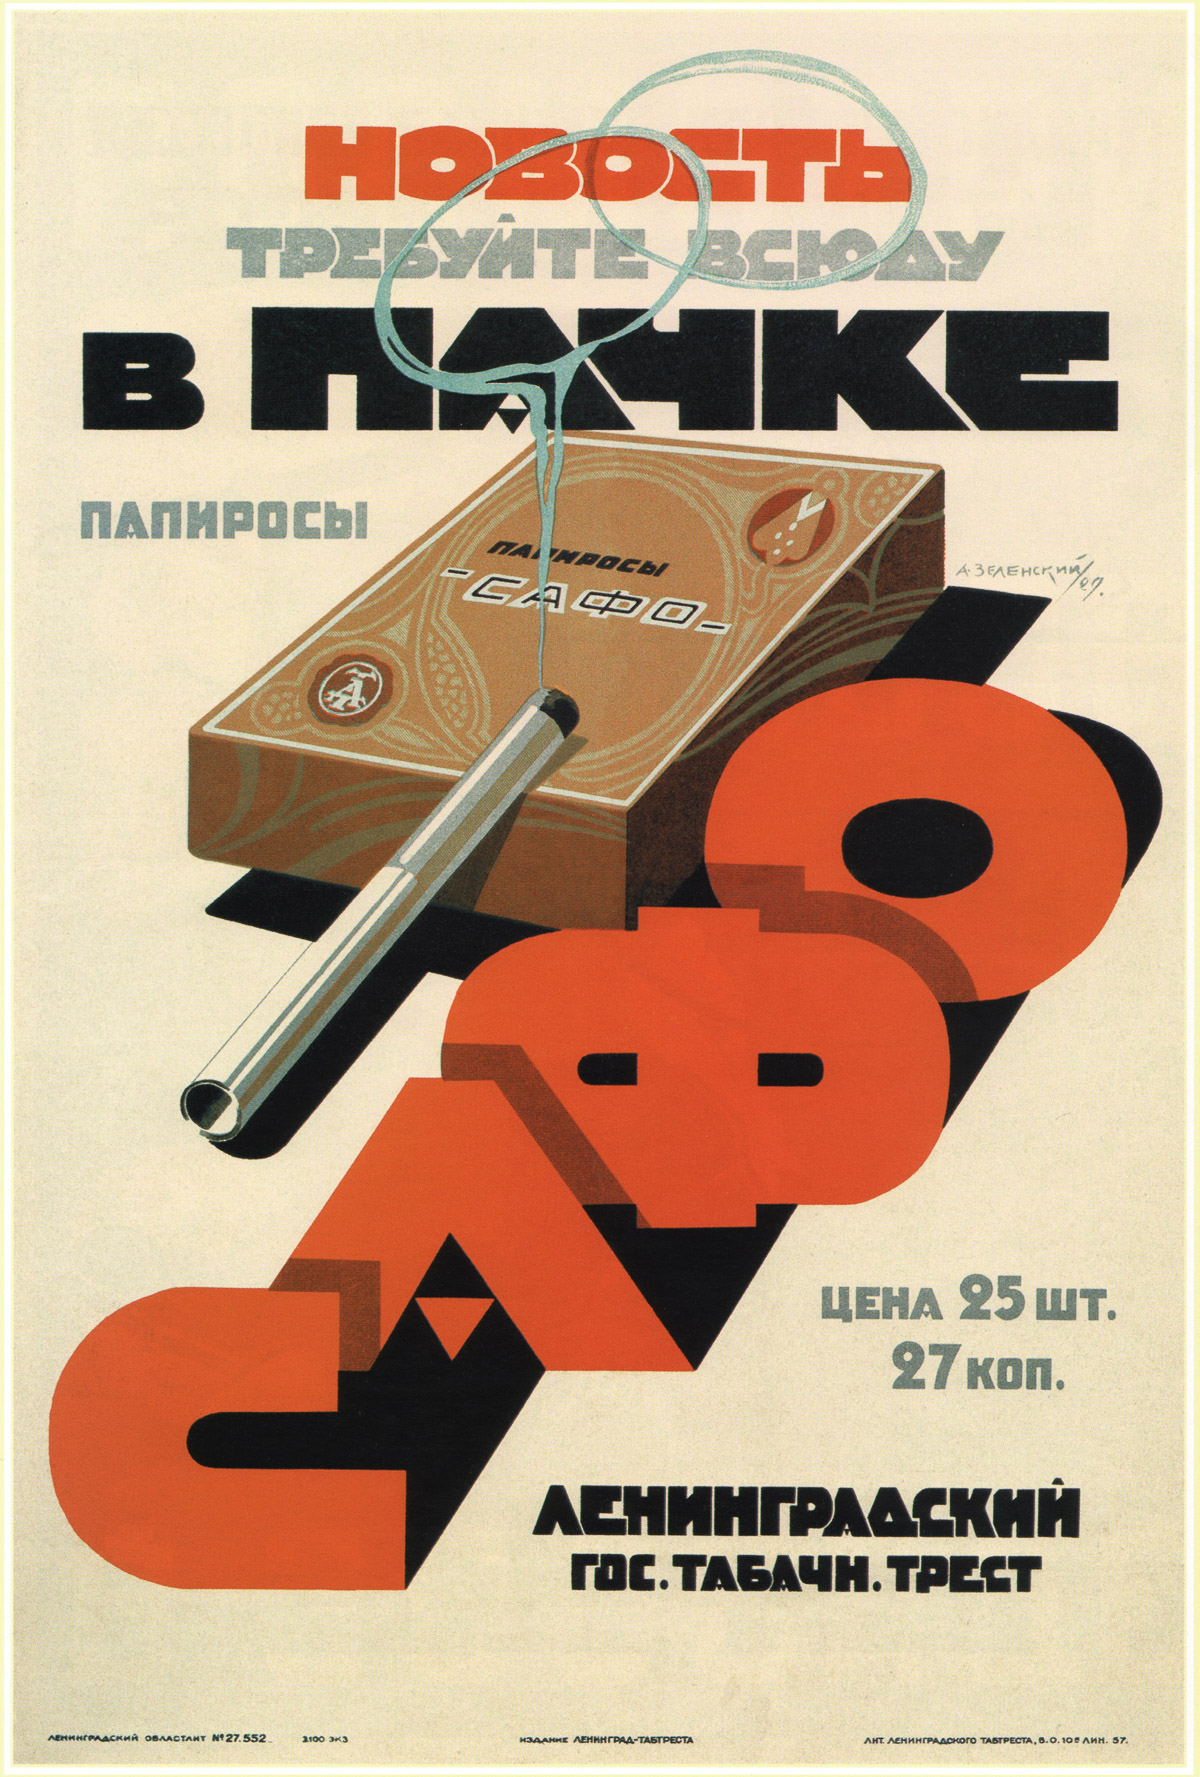 Sovetskaya reklama sigaret 17